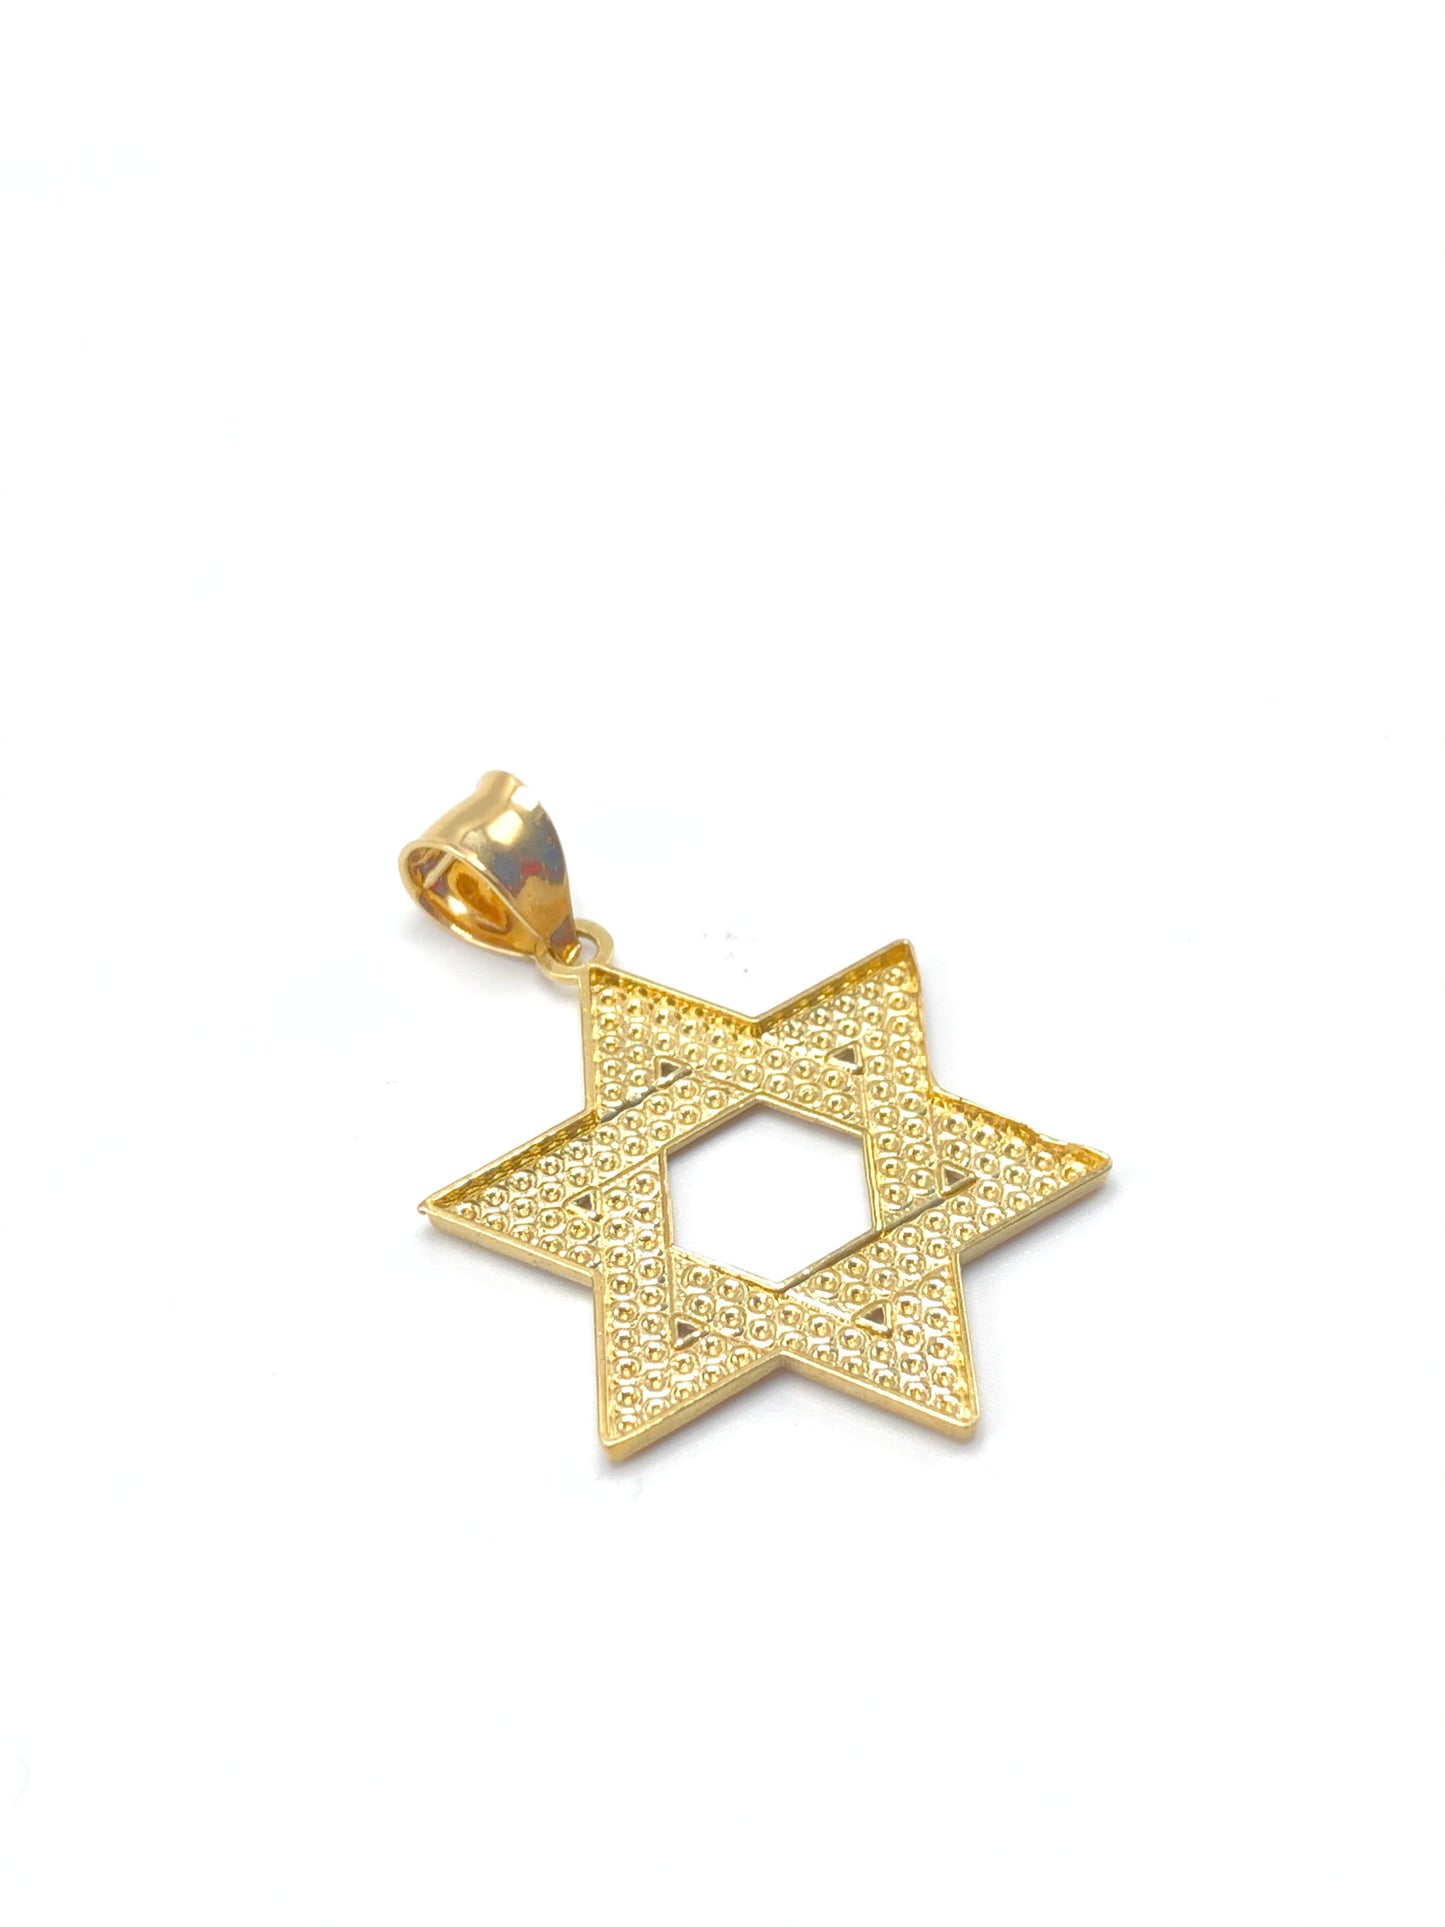 Yellow Gold Star of David Pendant